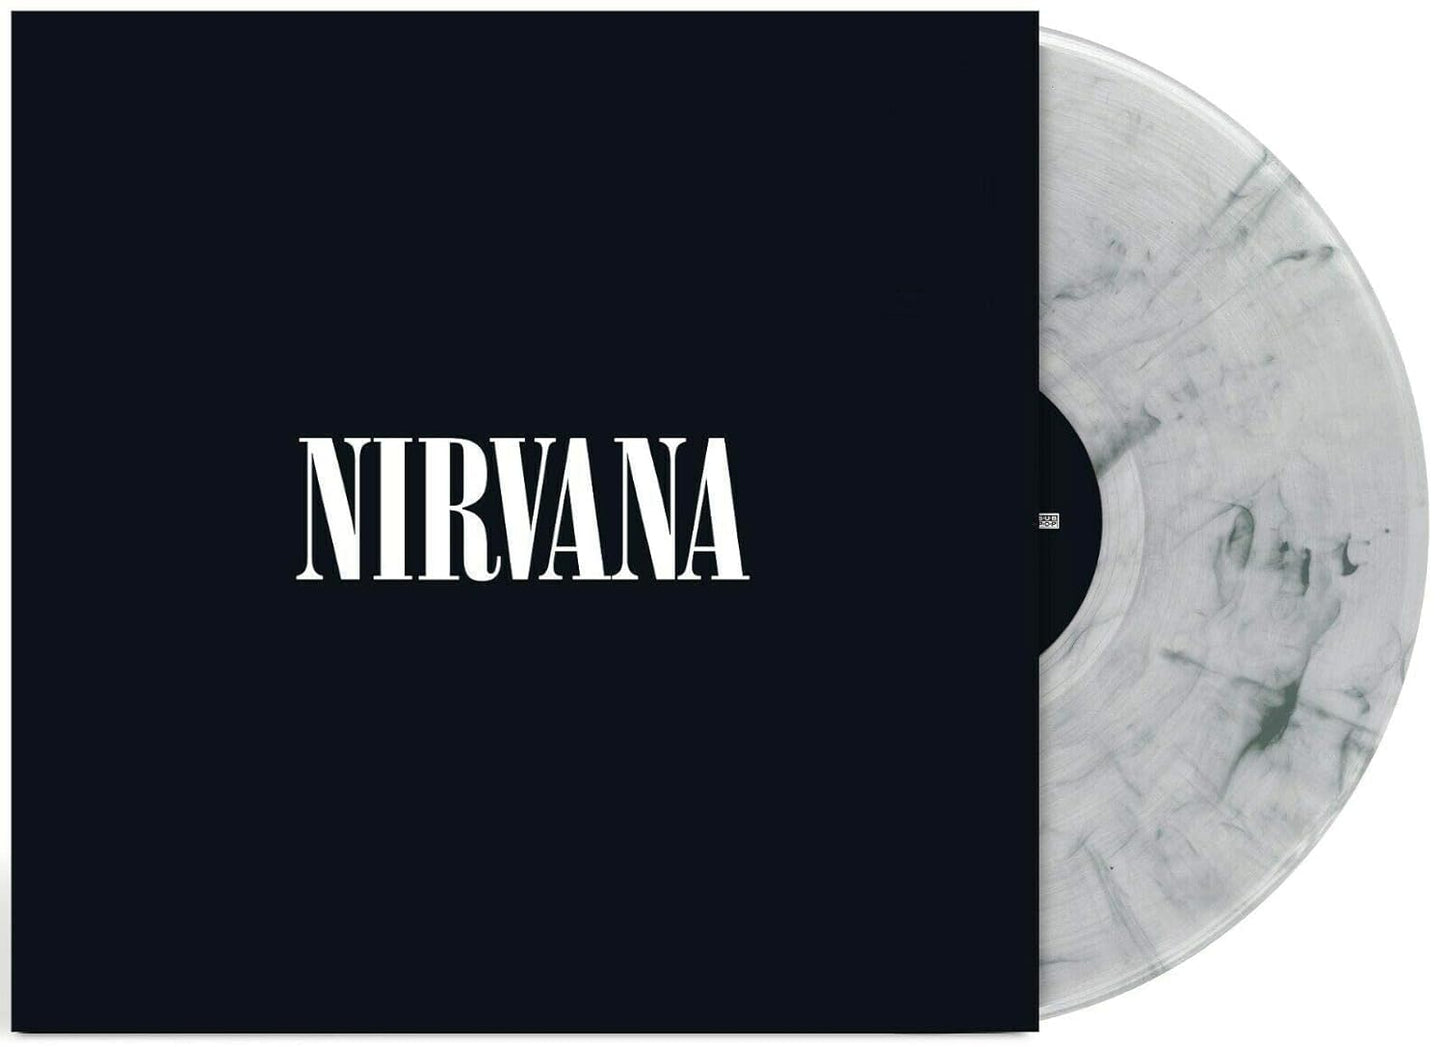 Nirvana "Nirvana" Album On Smoke Grey Color Vinyl LP Record